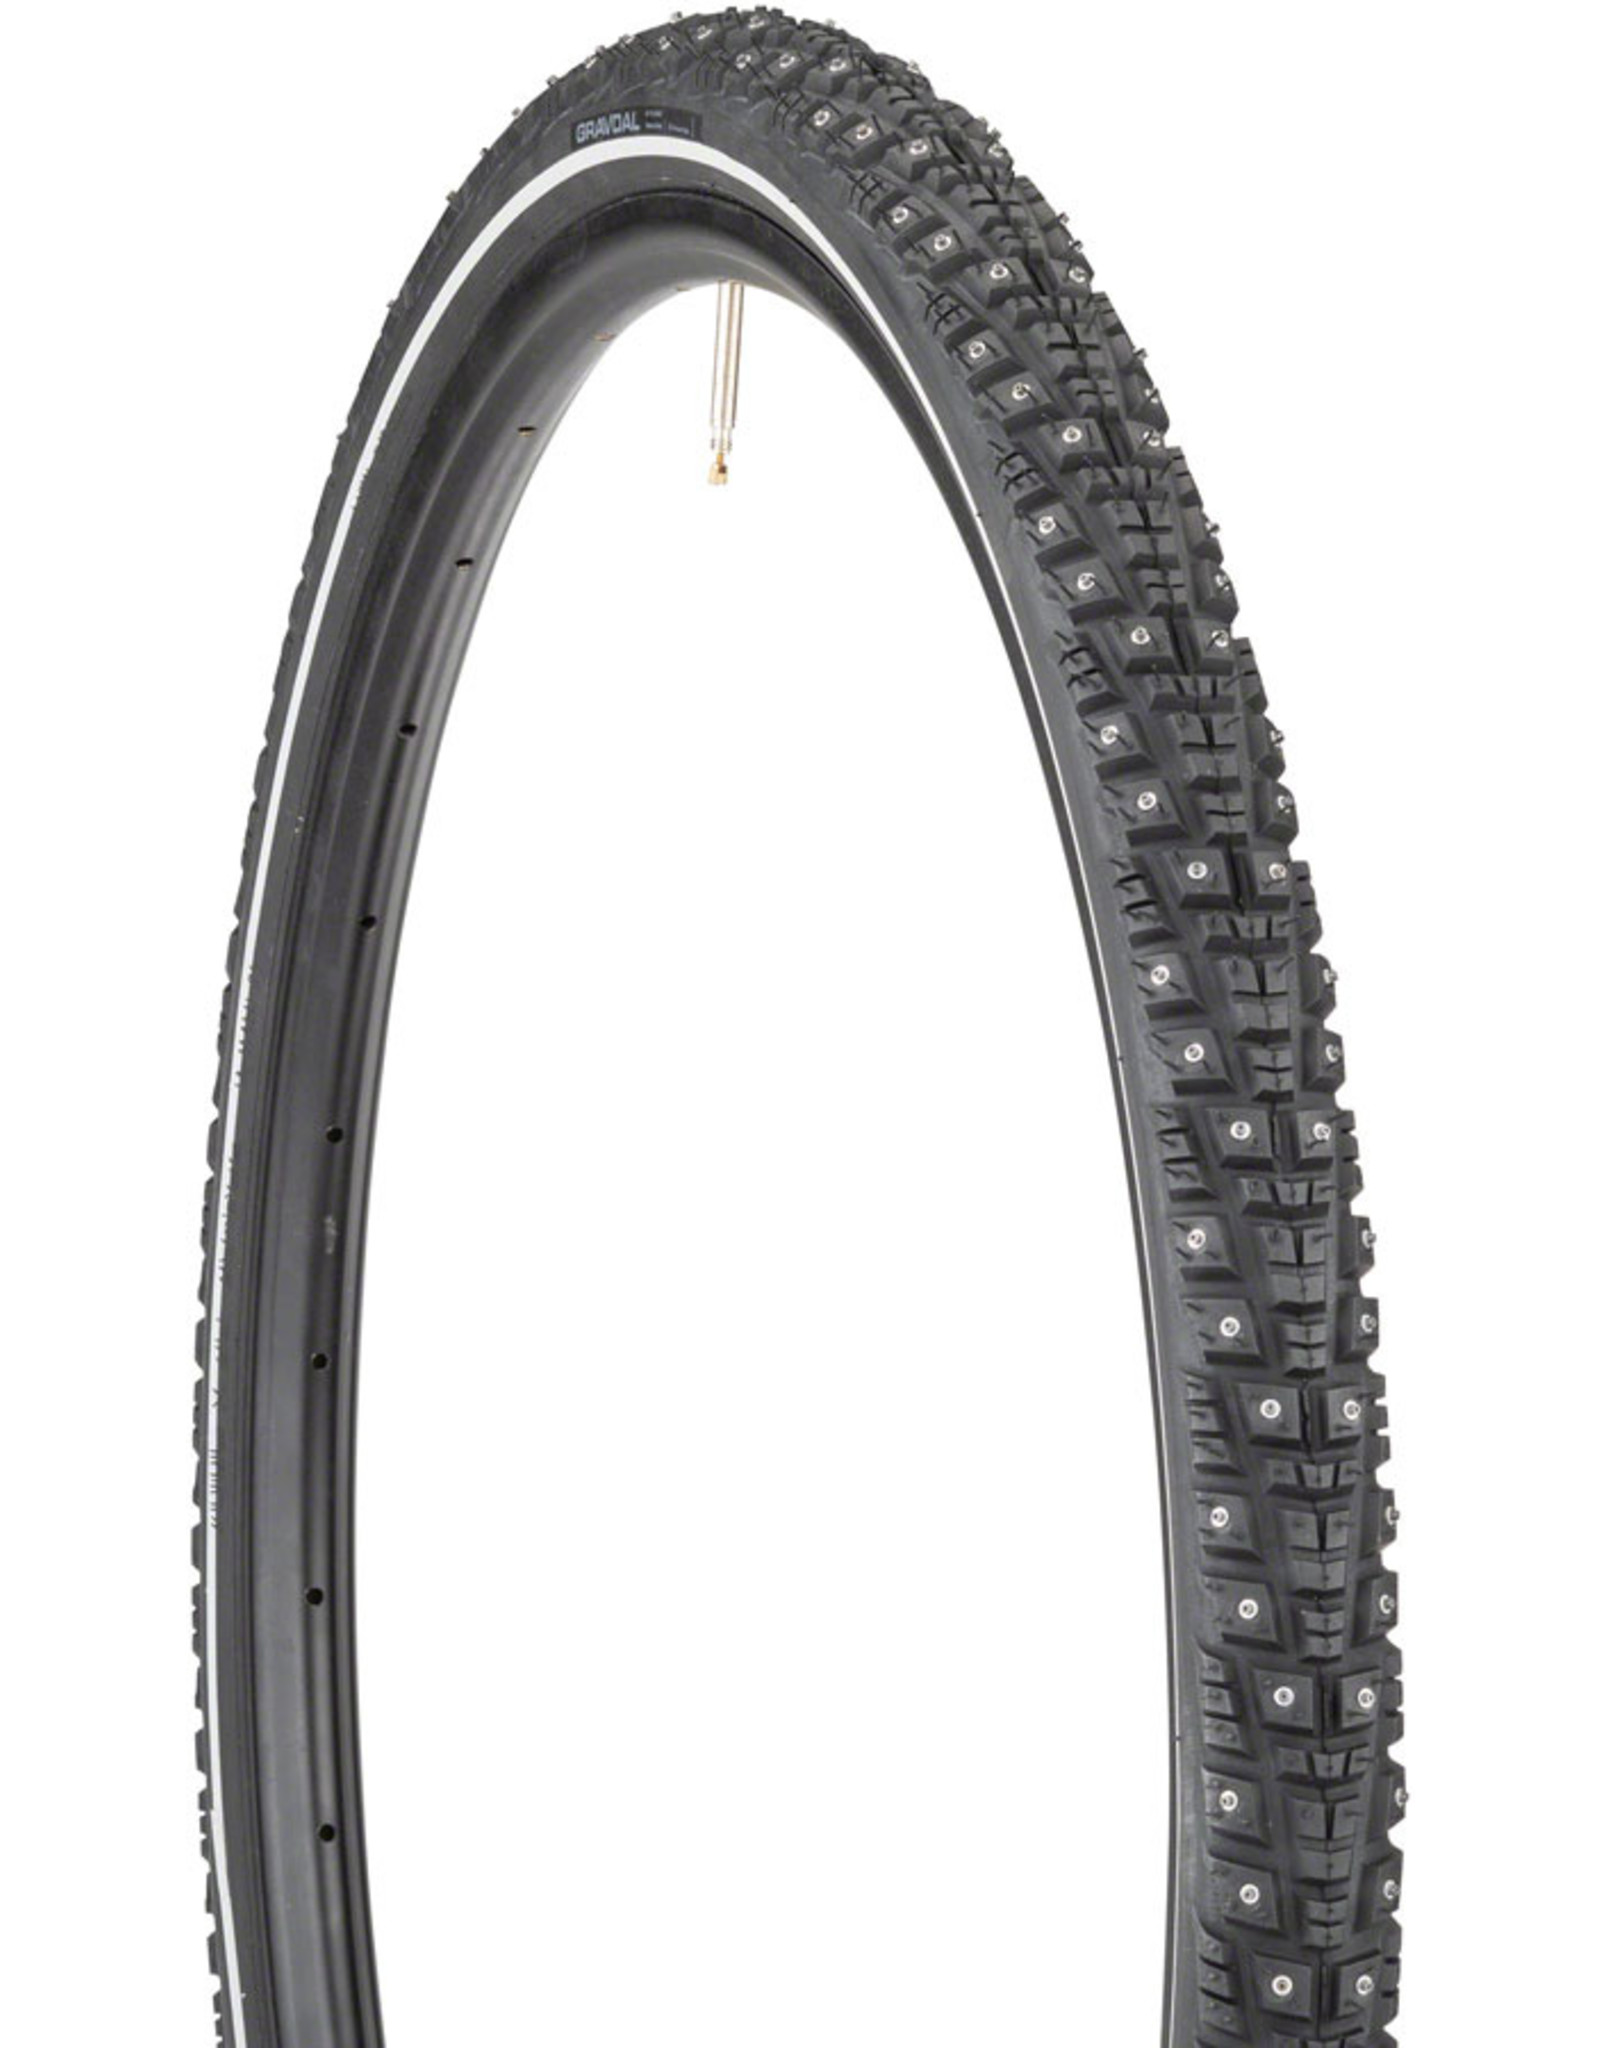 45NRTH 45NRTH Gravdal Tire - 650b x 38, Tubeless, Folding, Black, 60tpi, 240 Concave Carbide Studs